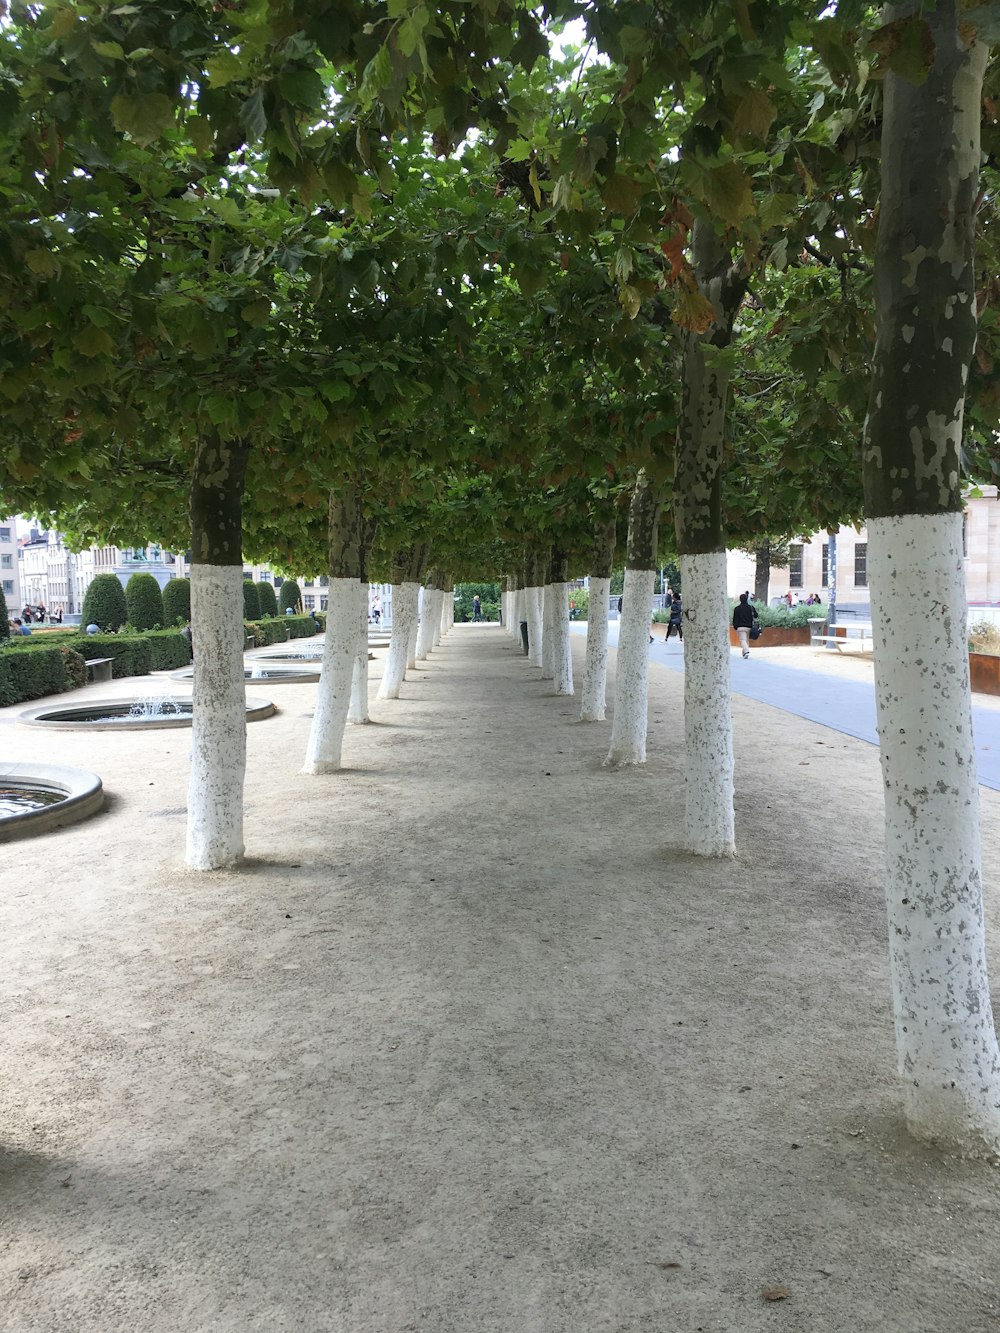 árvores verdes no solo de concreto cinzento durante o dia